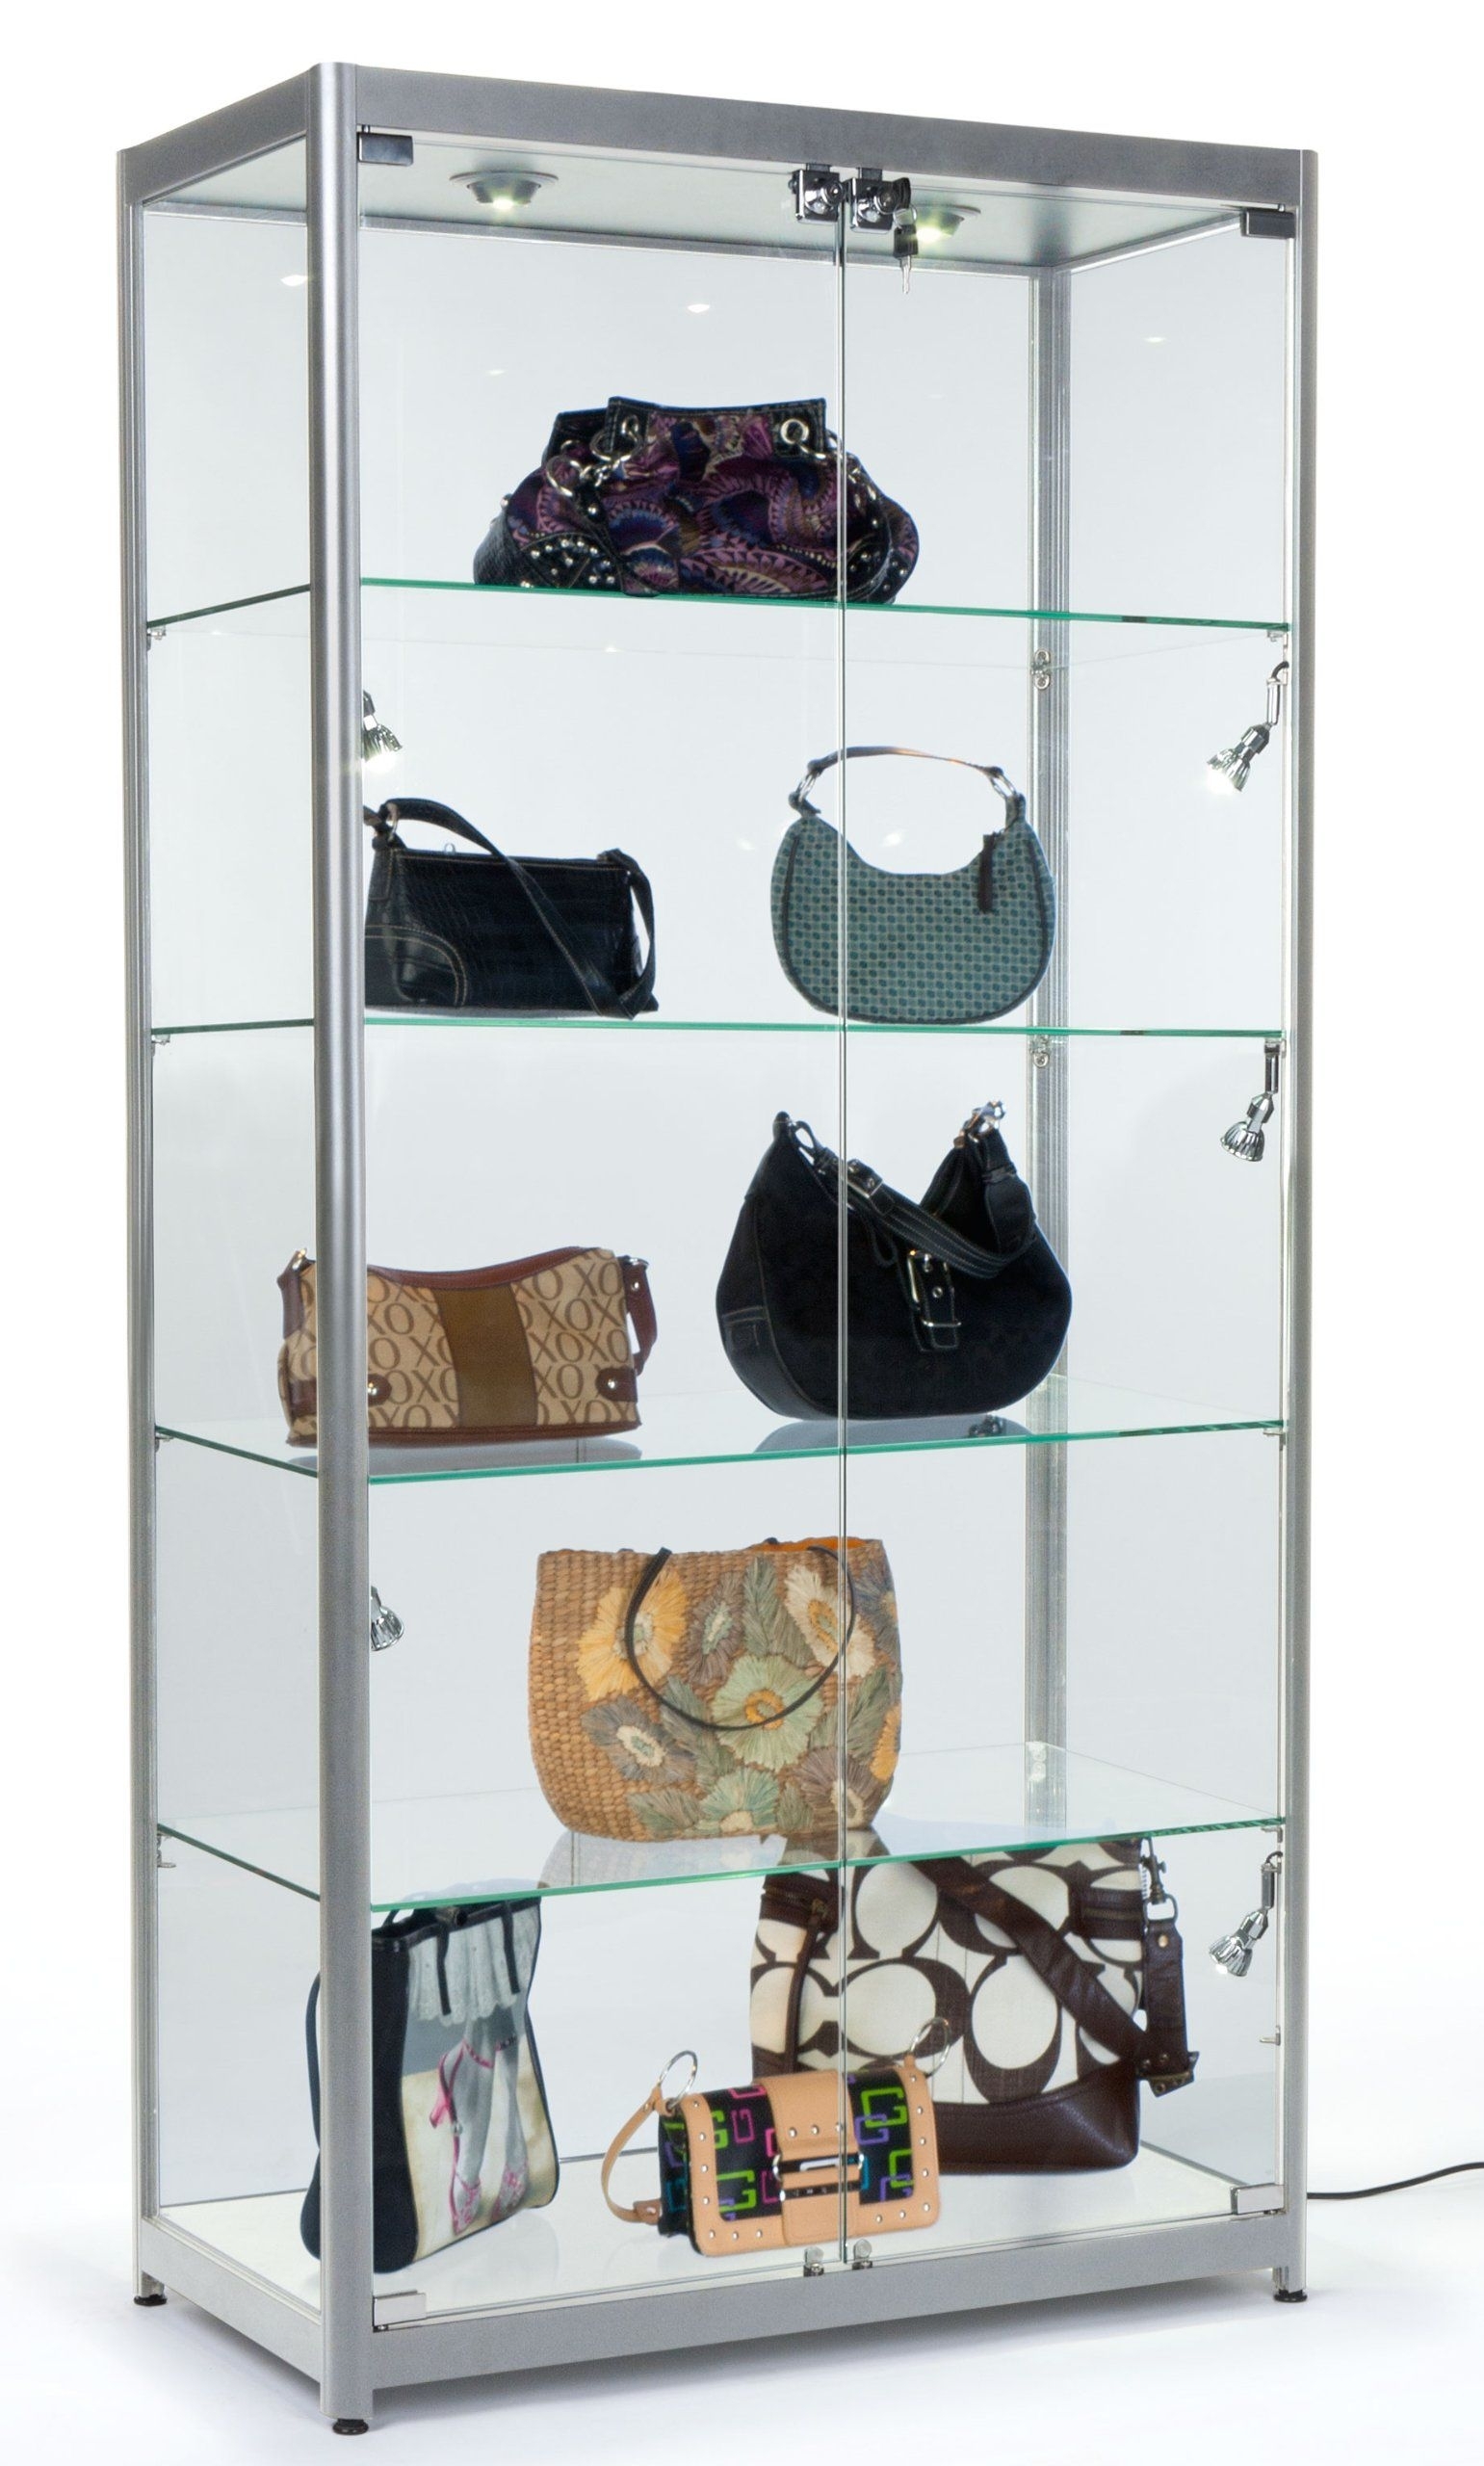 Luxury Bag Shop Wall Cabinet, Luxury Bag Showcase